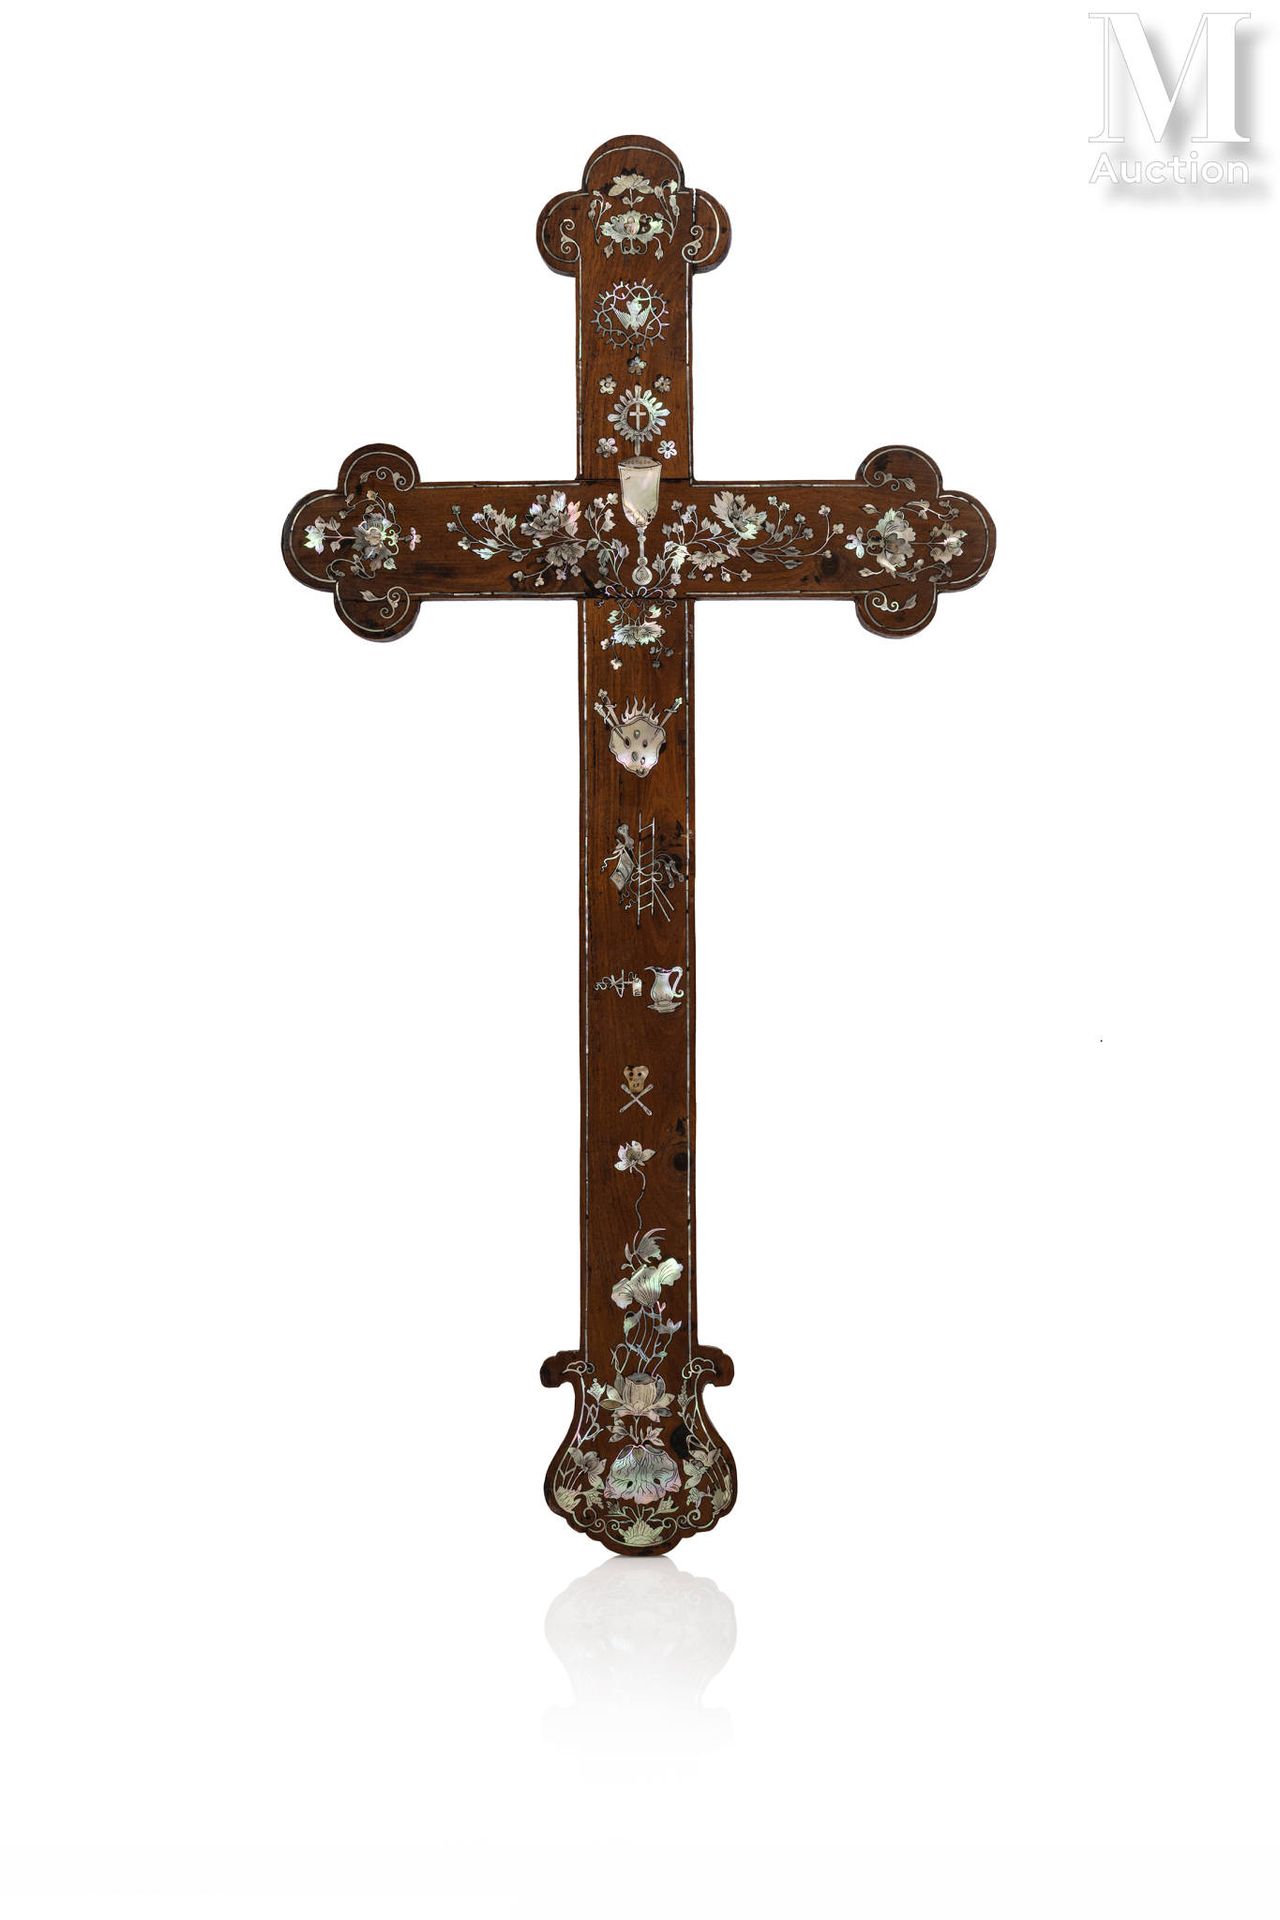 CHINE DU SUD, XIXe siècle Cruz cristiana

de madera natural, decorada con incrus&hellip;